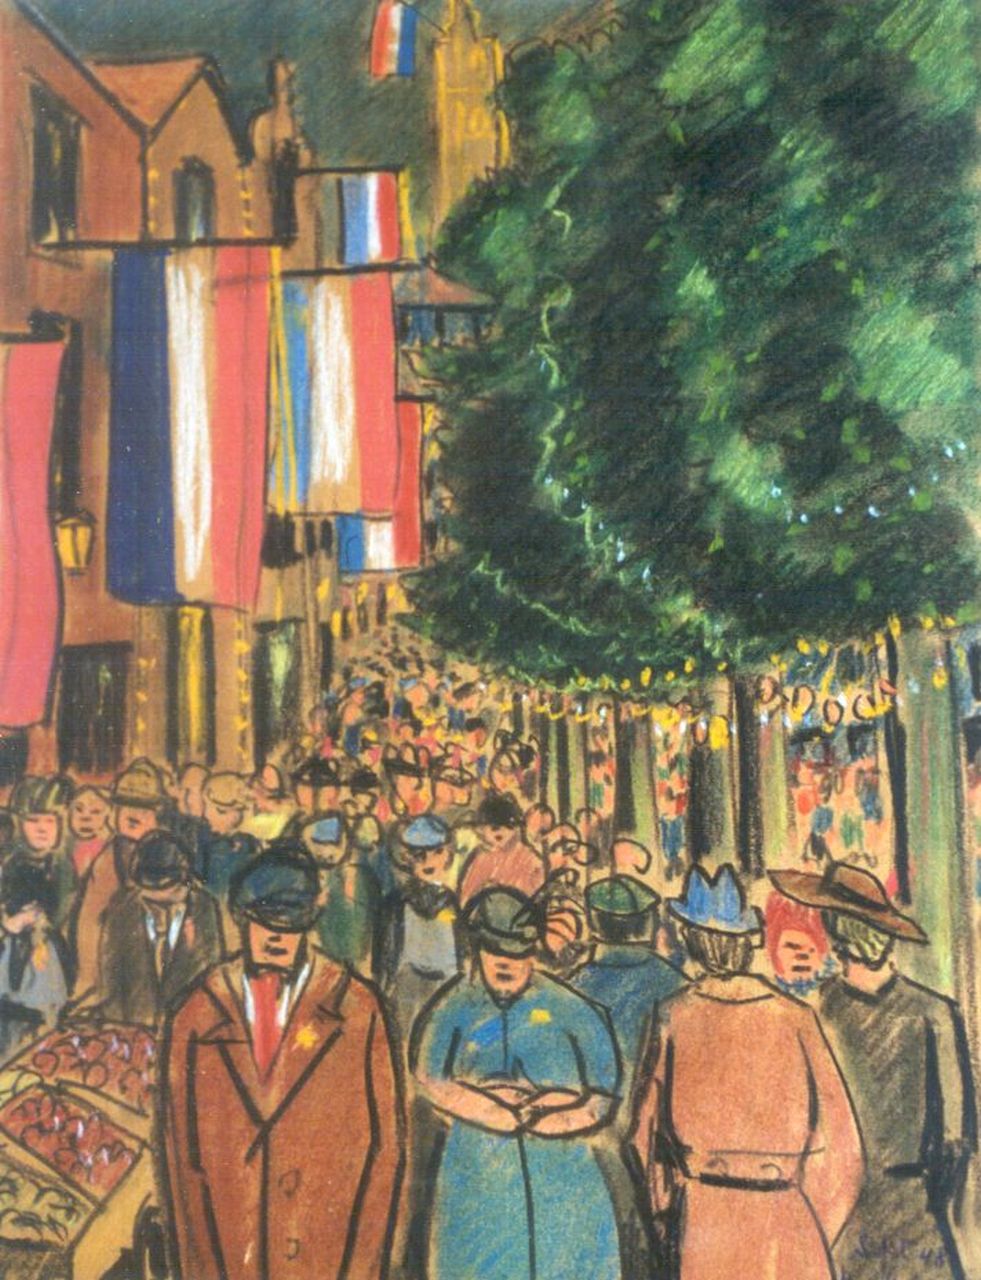 Lokhorst W.F.  | Willem Frederik 'Bob' Lokhorst, Kroningsfeest Amsterdam, 1948, gekleurd krijt op papier 32,4 x 24,9 cm, gesigneerd rechtsonder en gedateerd sept. '48